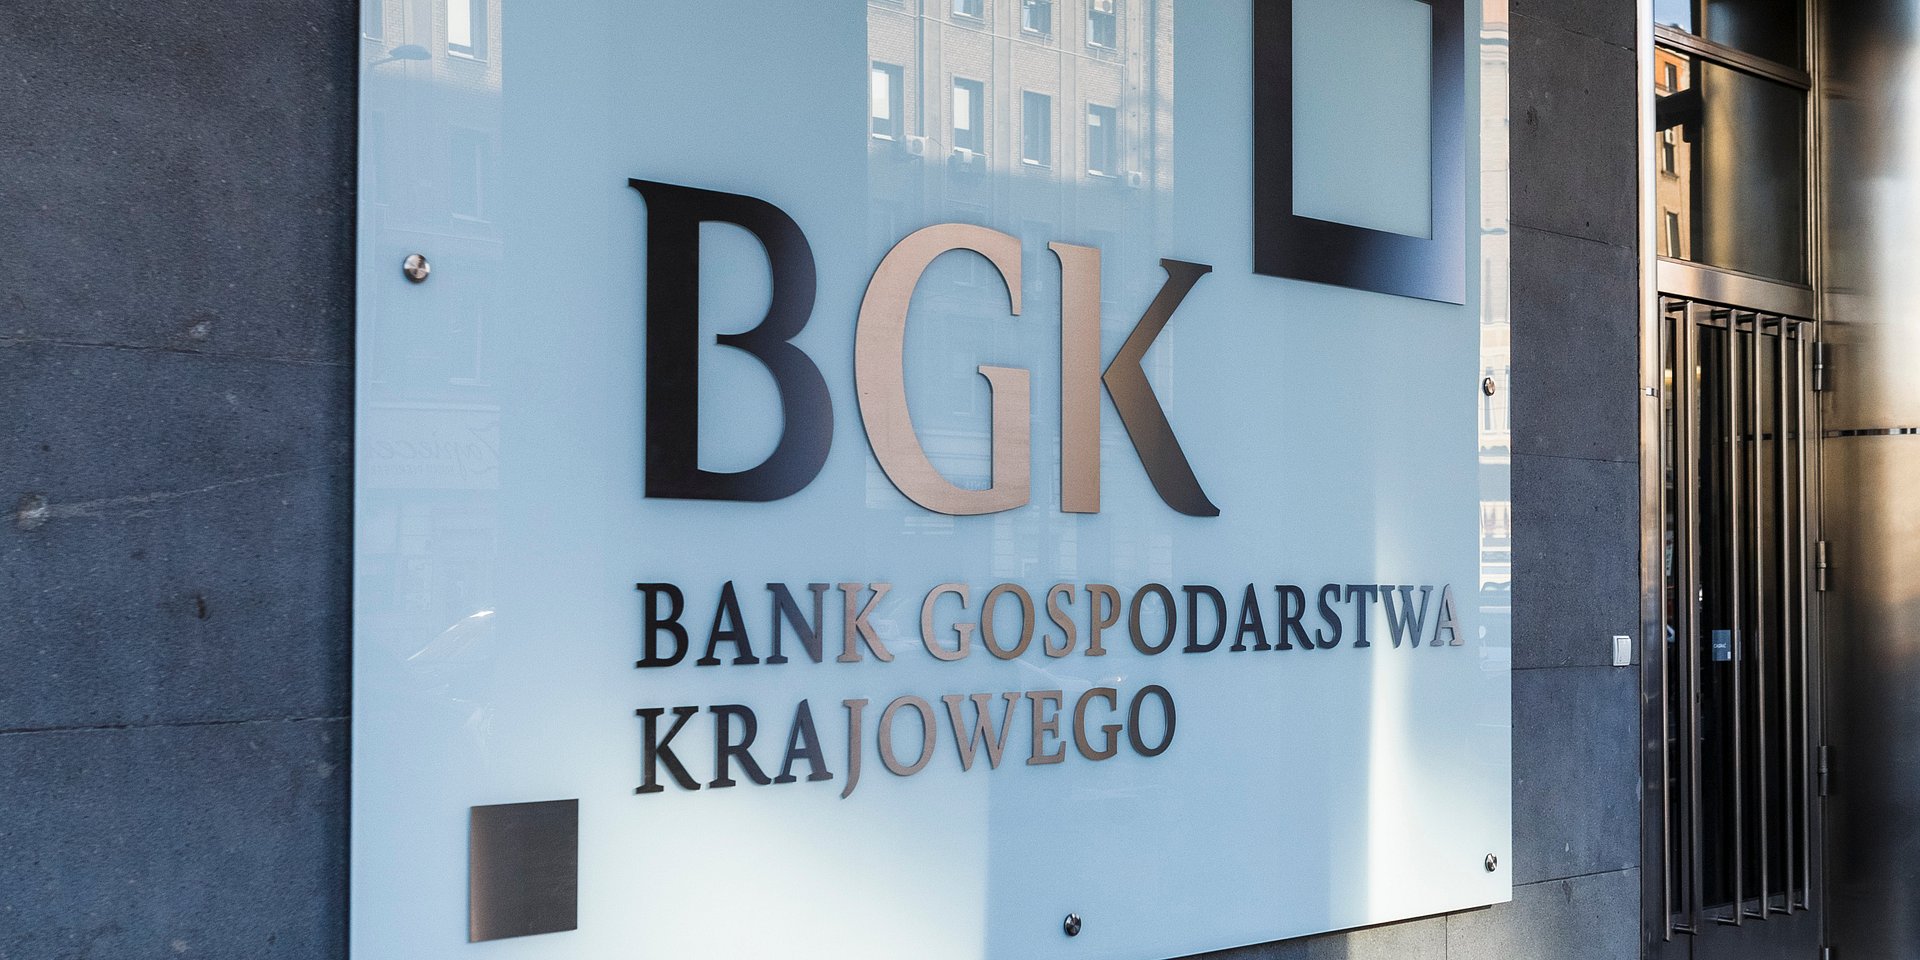 BGK photo logo